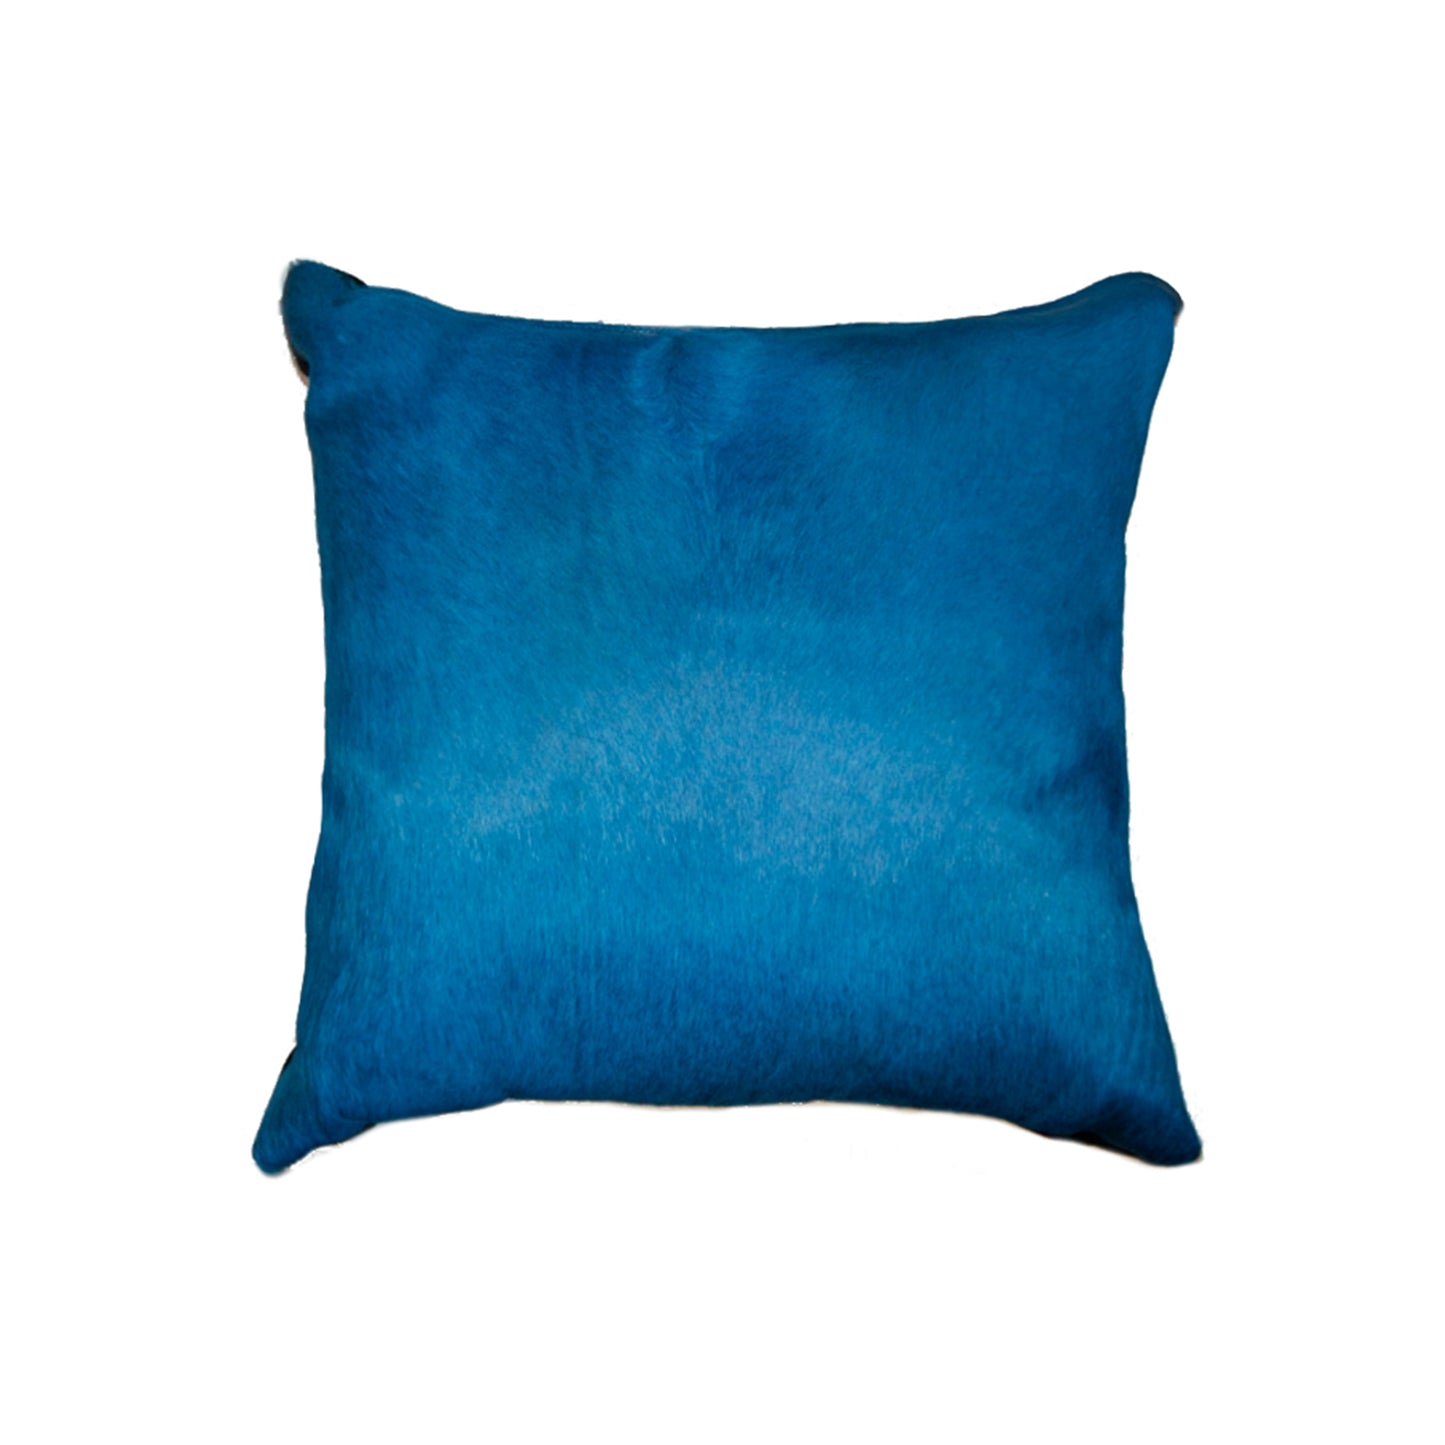 18" X 18" Blue Cowhide Pillow